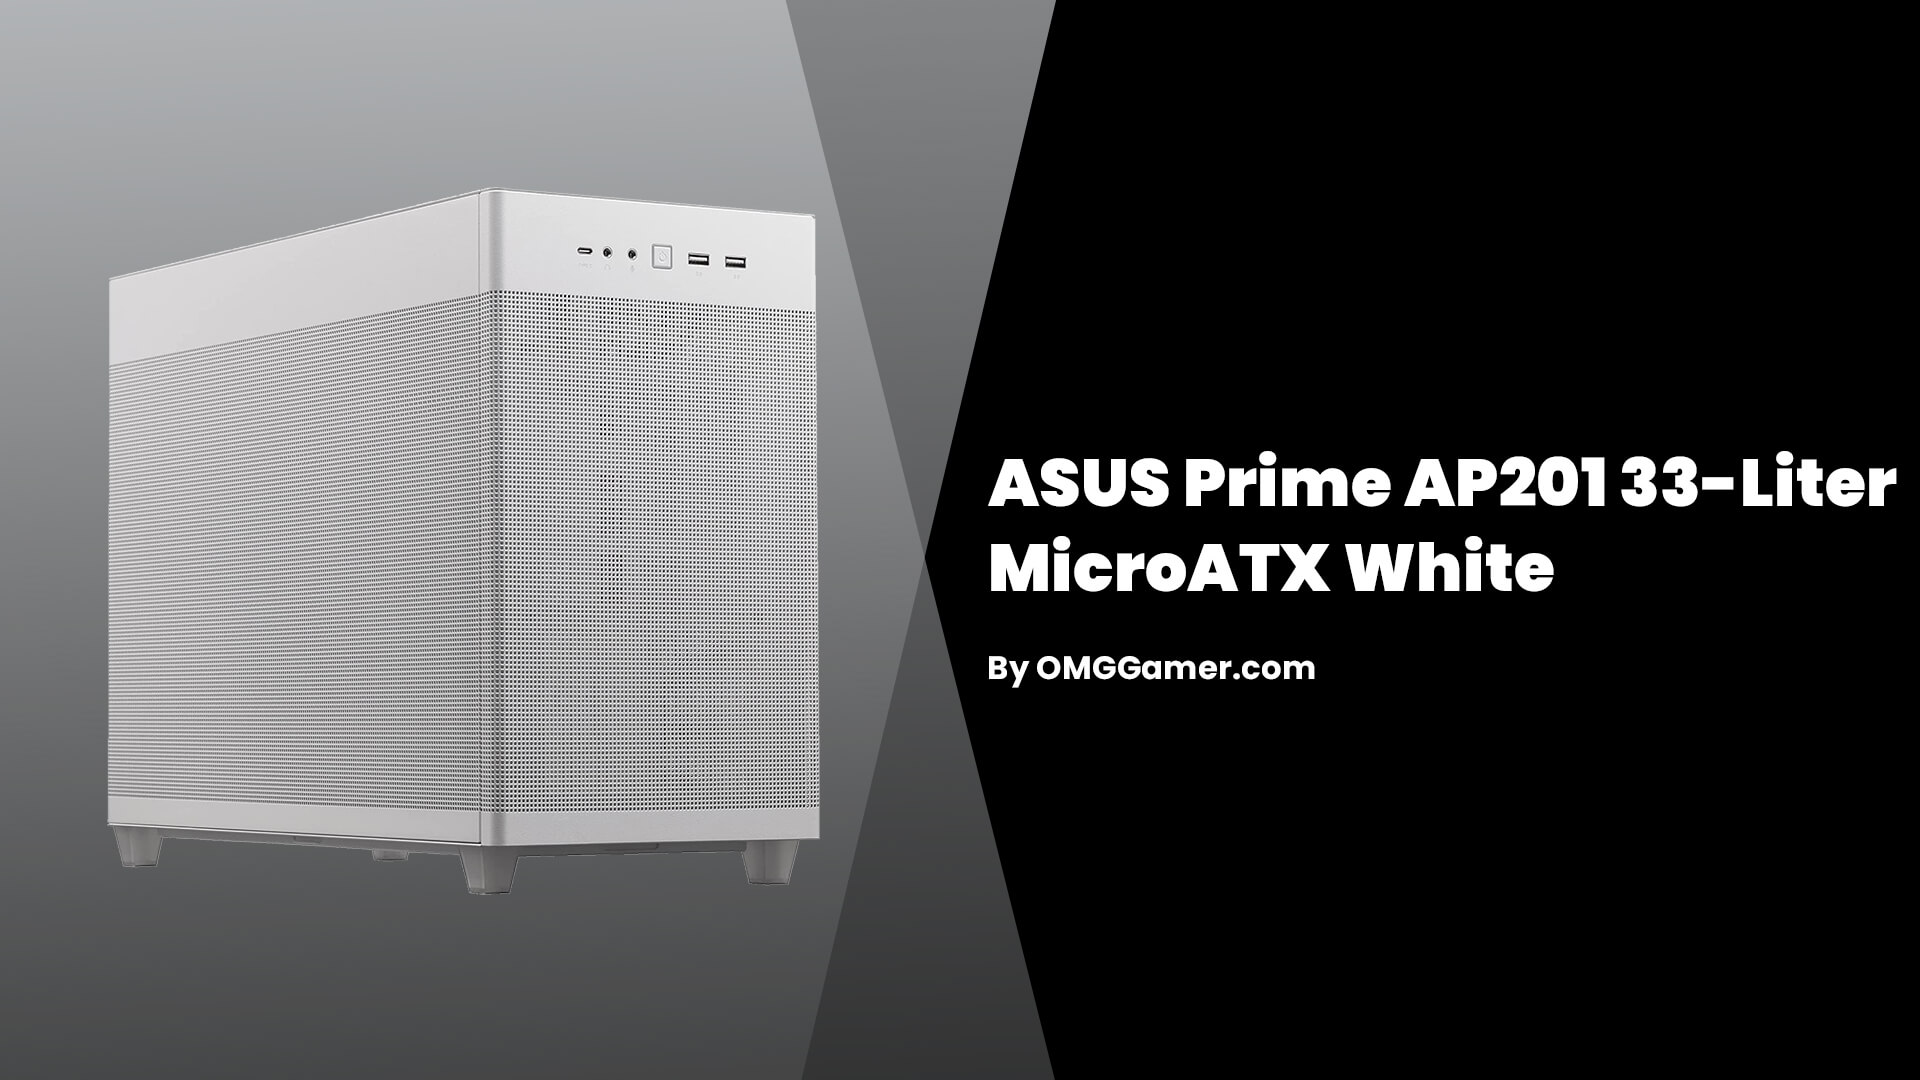 ASUS Prime AP201 33-Liter MicroATX White